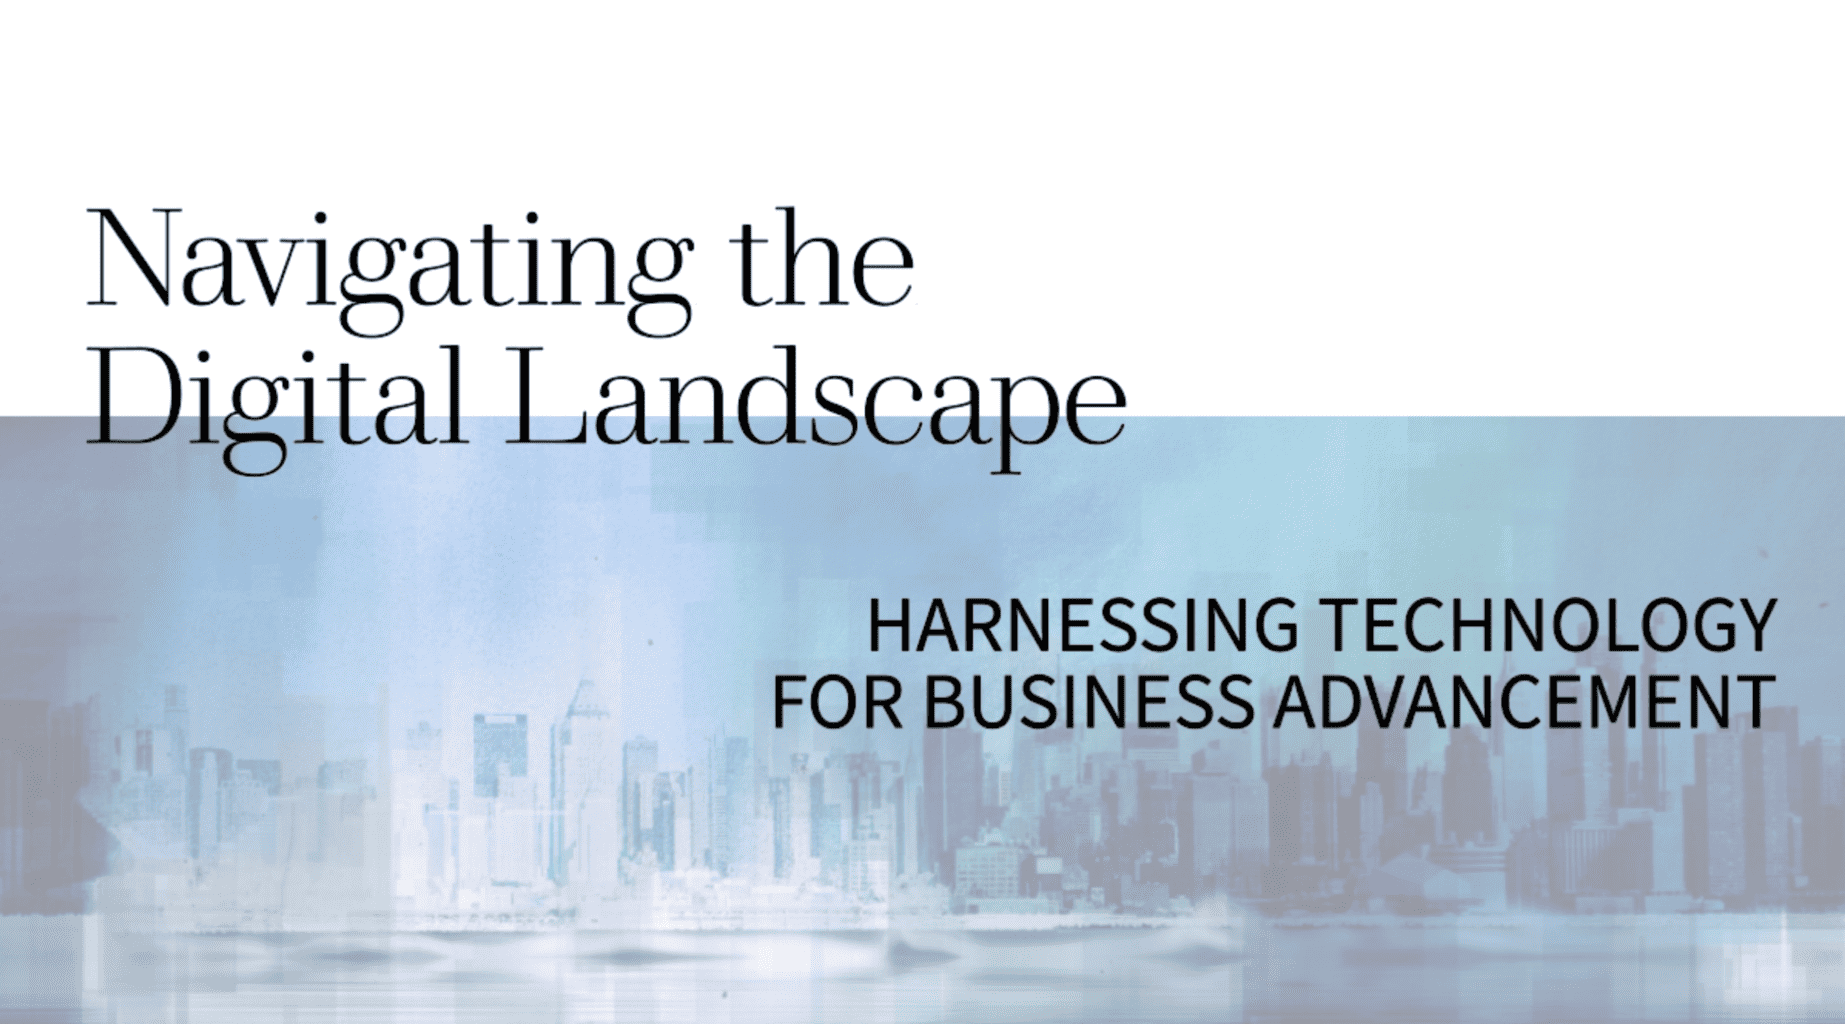 Harnessing Technology for Business Advancement: Navigating the Digital Landscape